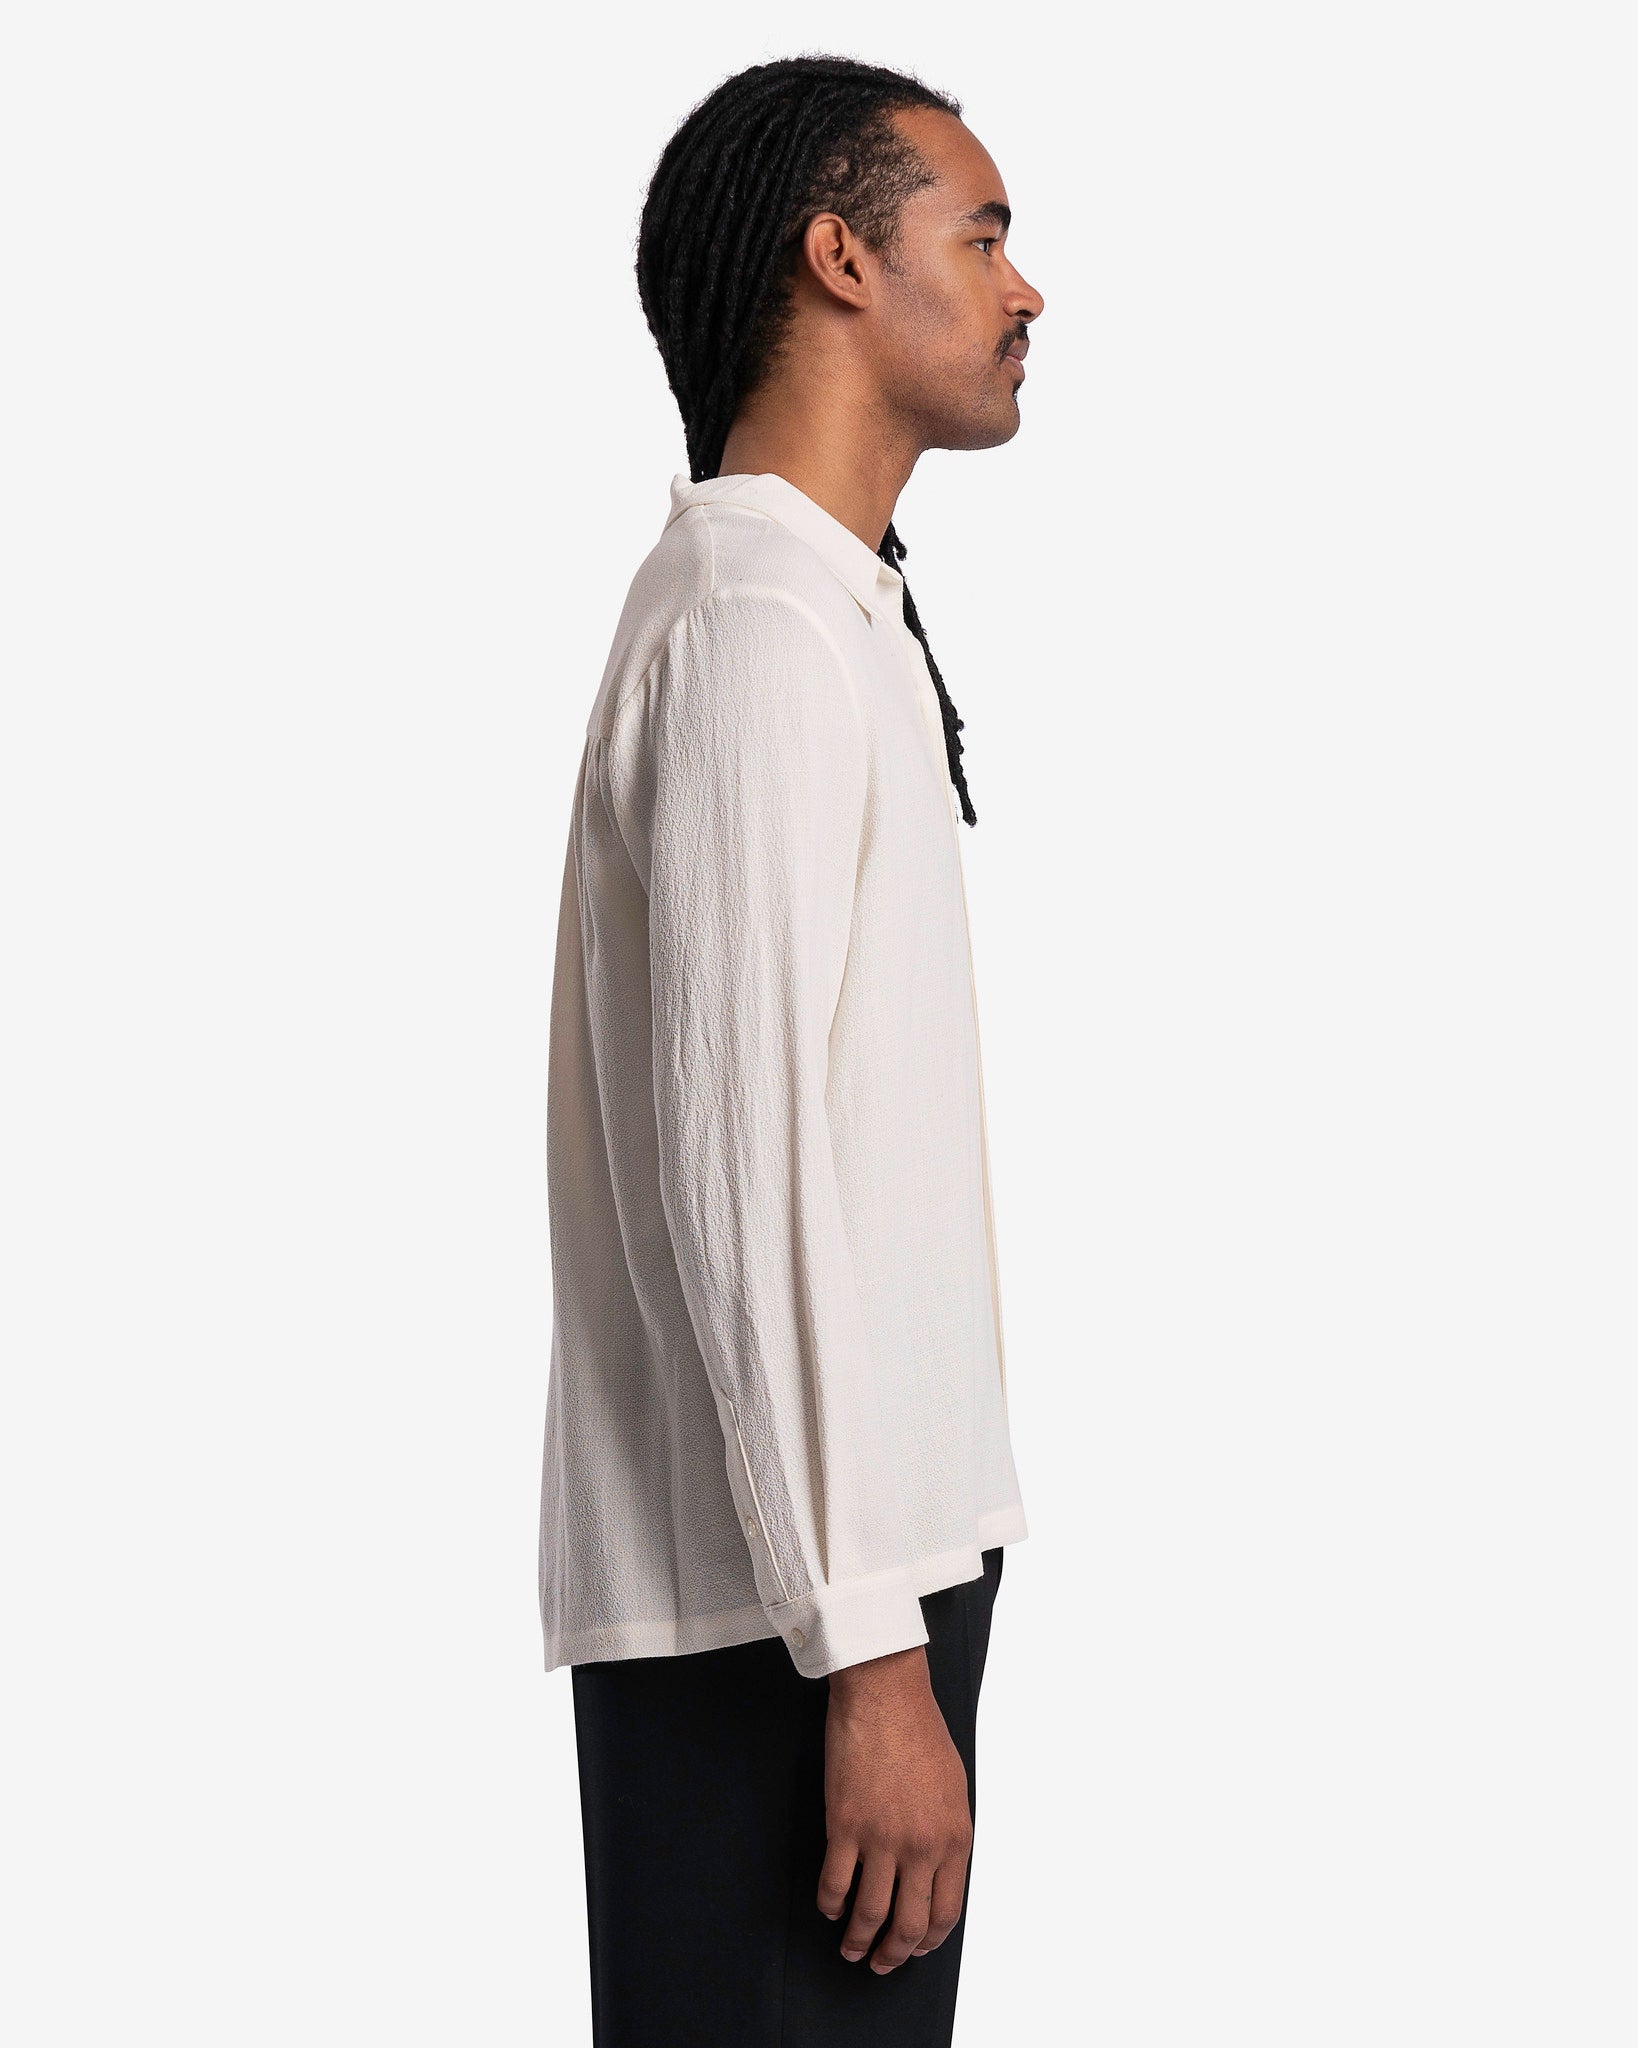 Séfr Men's Shirts Rampoua Shirt in Off-White